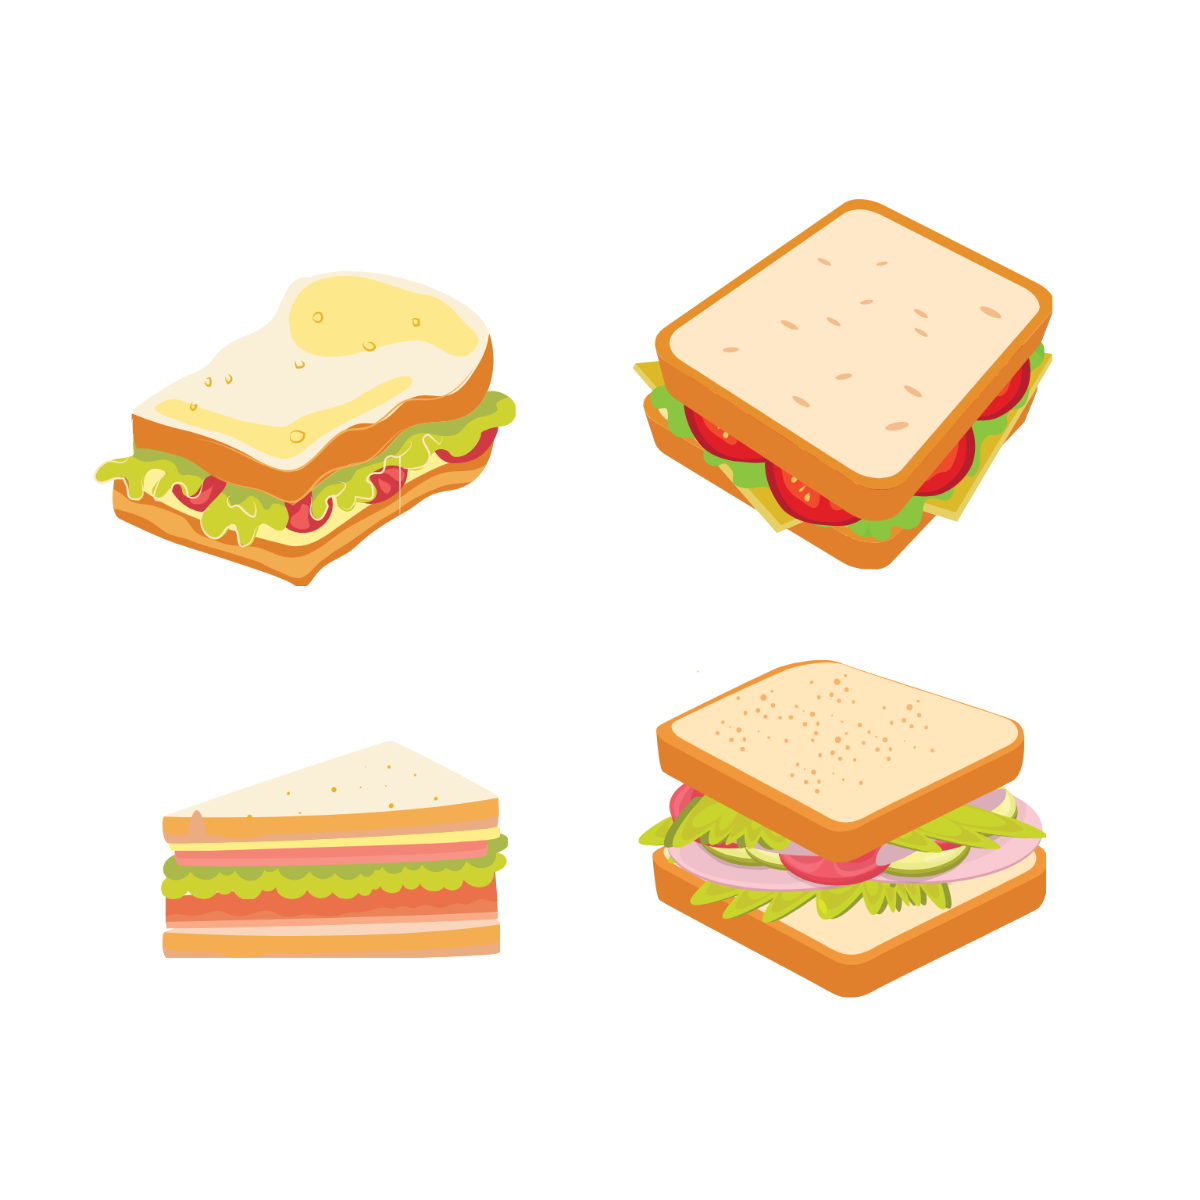 Sandwich Vector